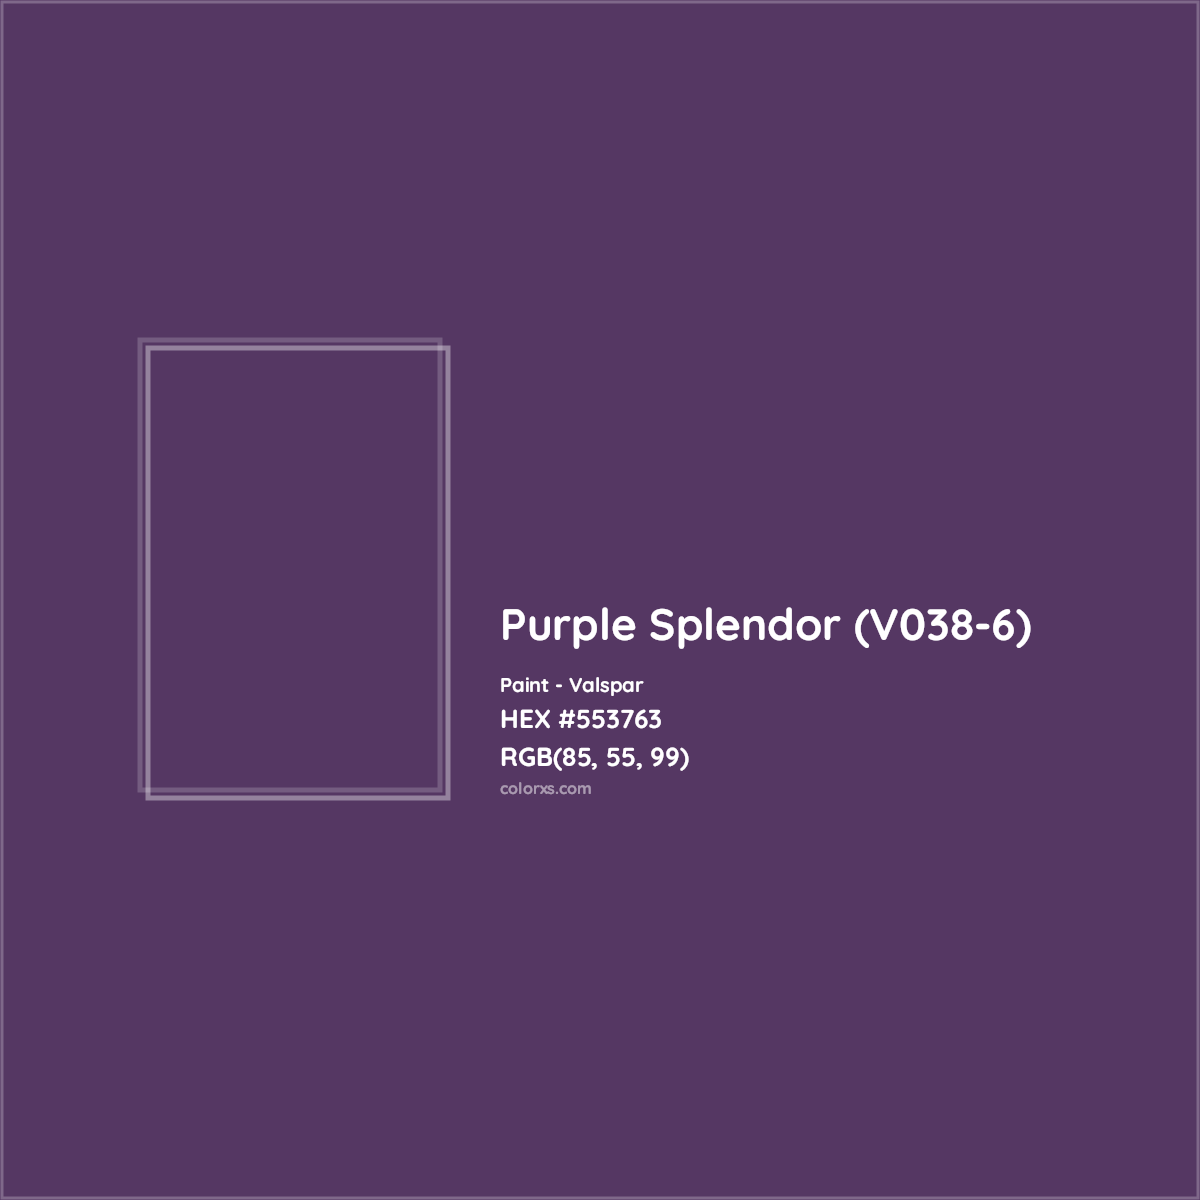 HEX #553763 Purple Splendor (V038-6) Paint Valspar - Color Code